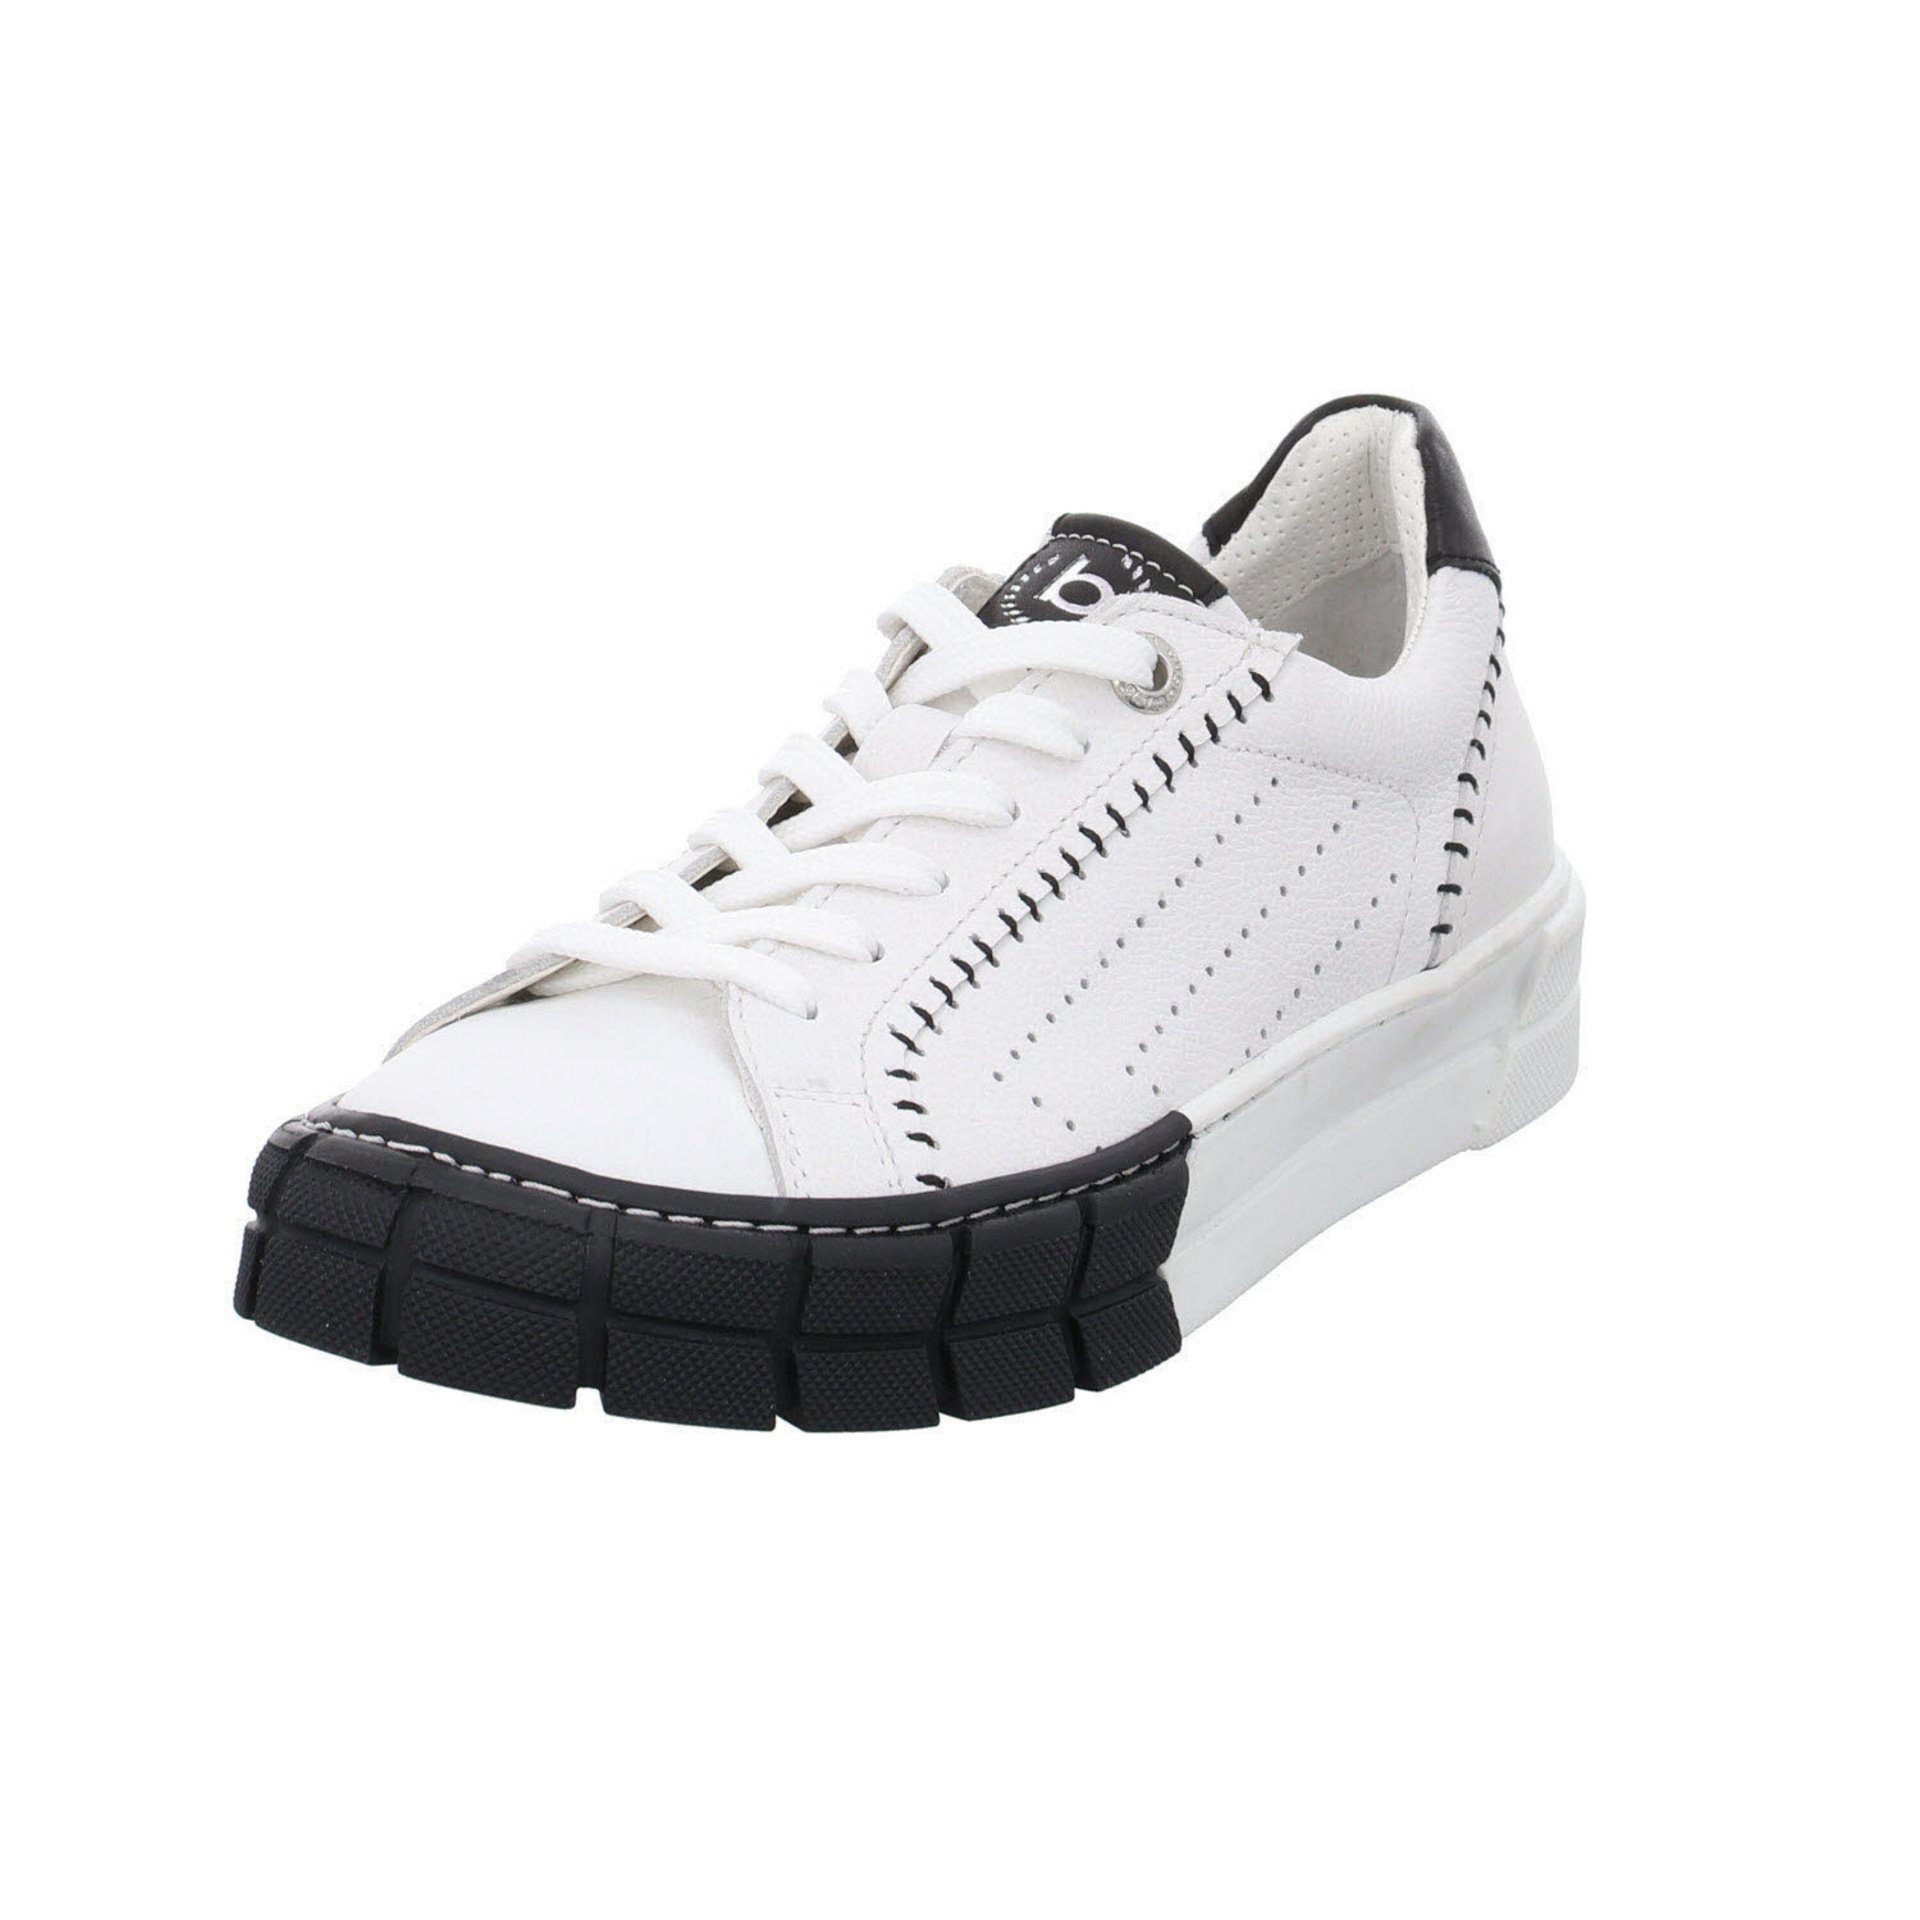 white Tia Glattleder Sport Schnürschuh Sneaker / black bugatti Halbschuhe Sneaker Damen Schuhe